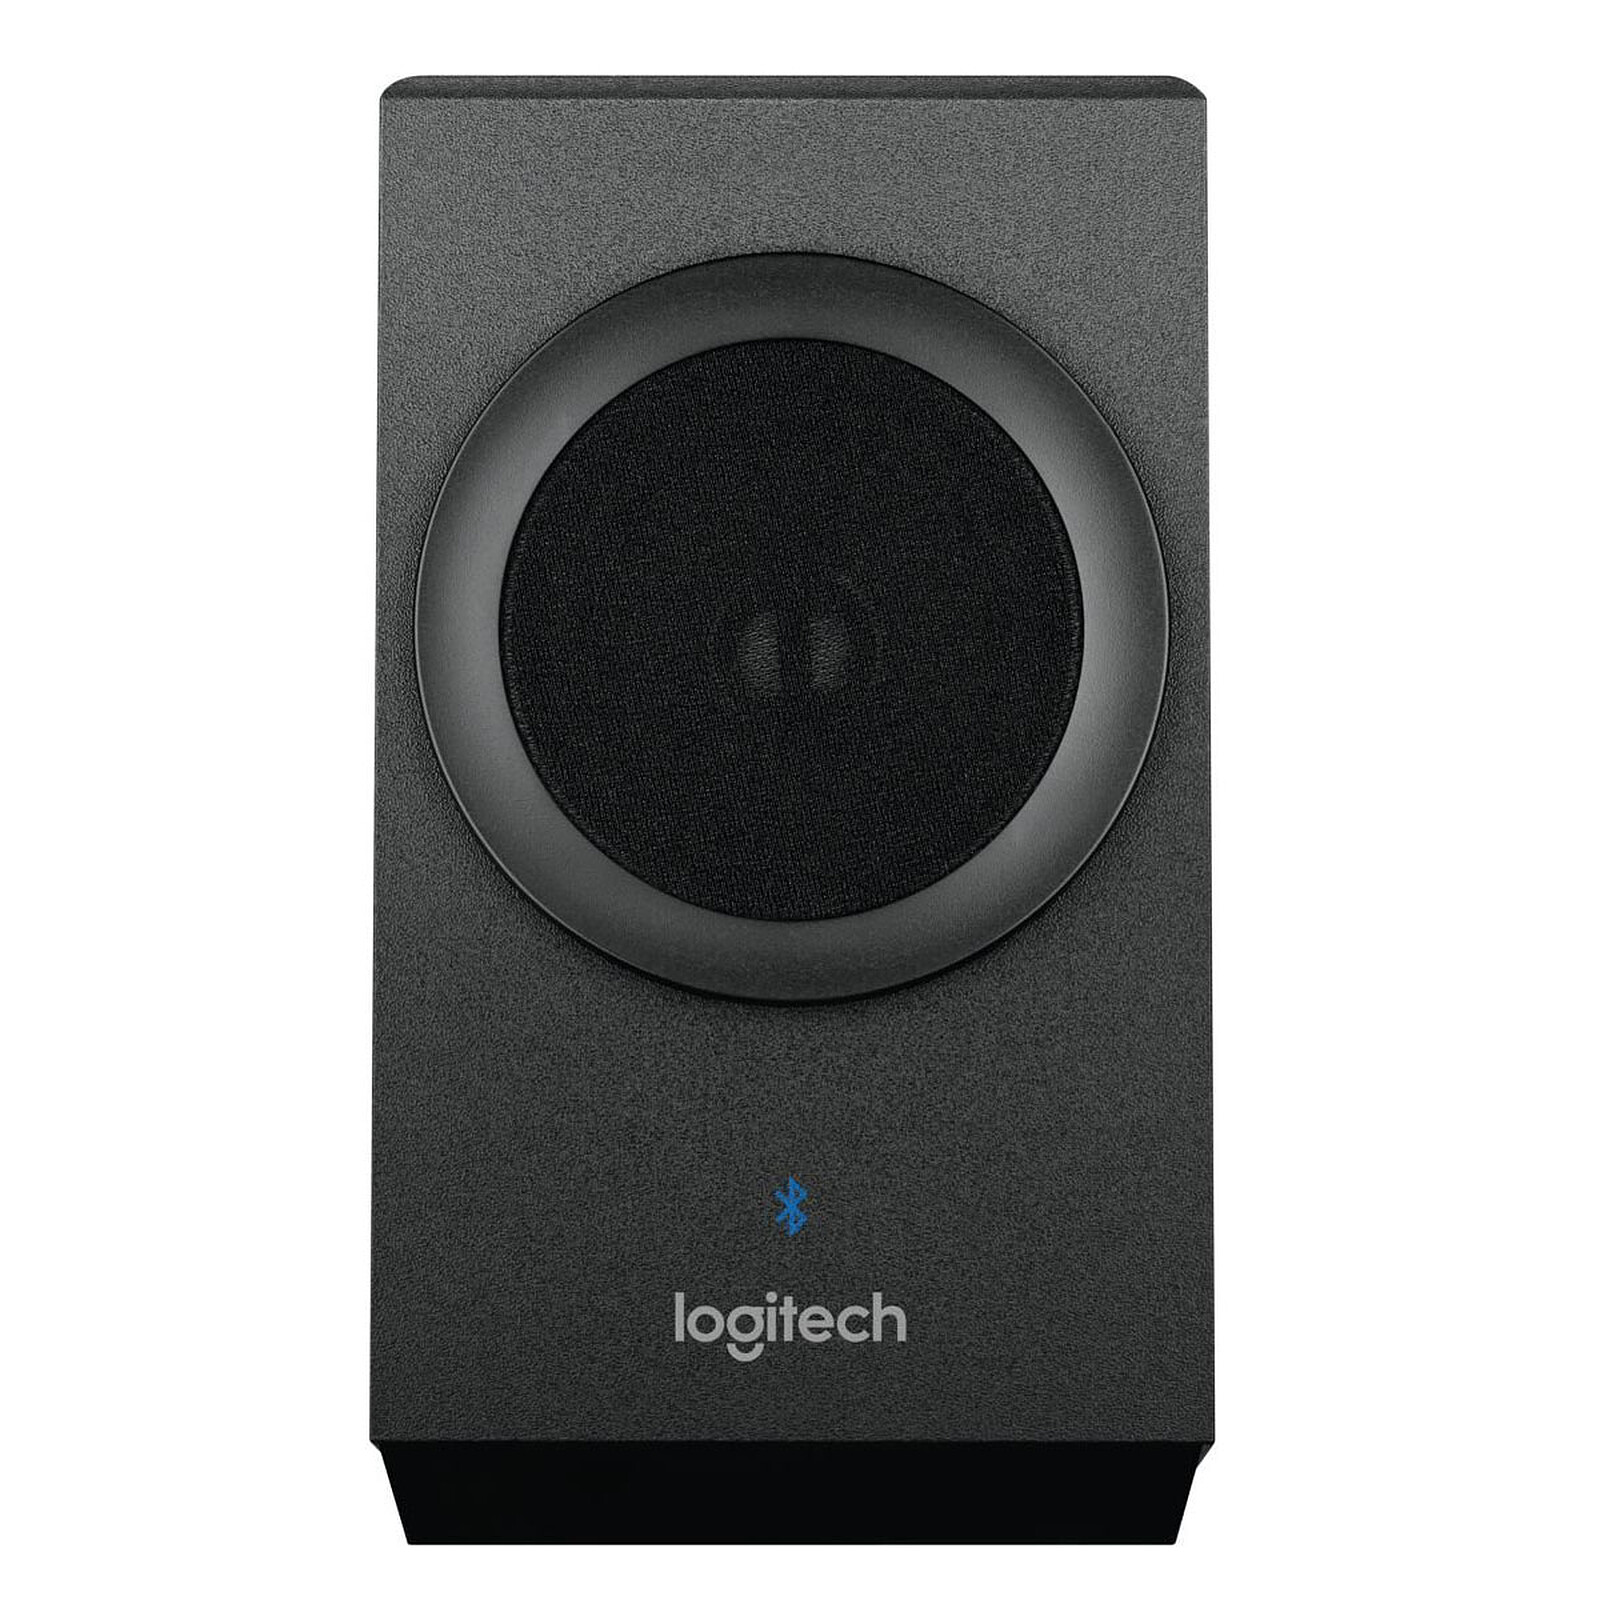 Logitech Multimedia Speakers System Z533 - Enceinte PC - Garantie 3 ans LDLC